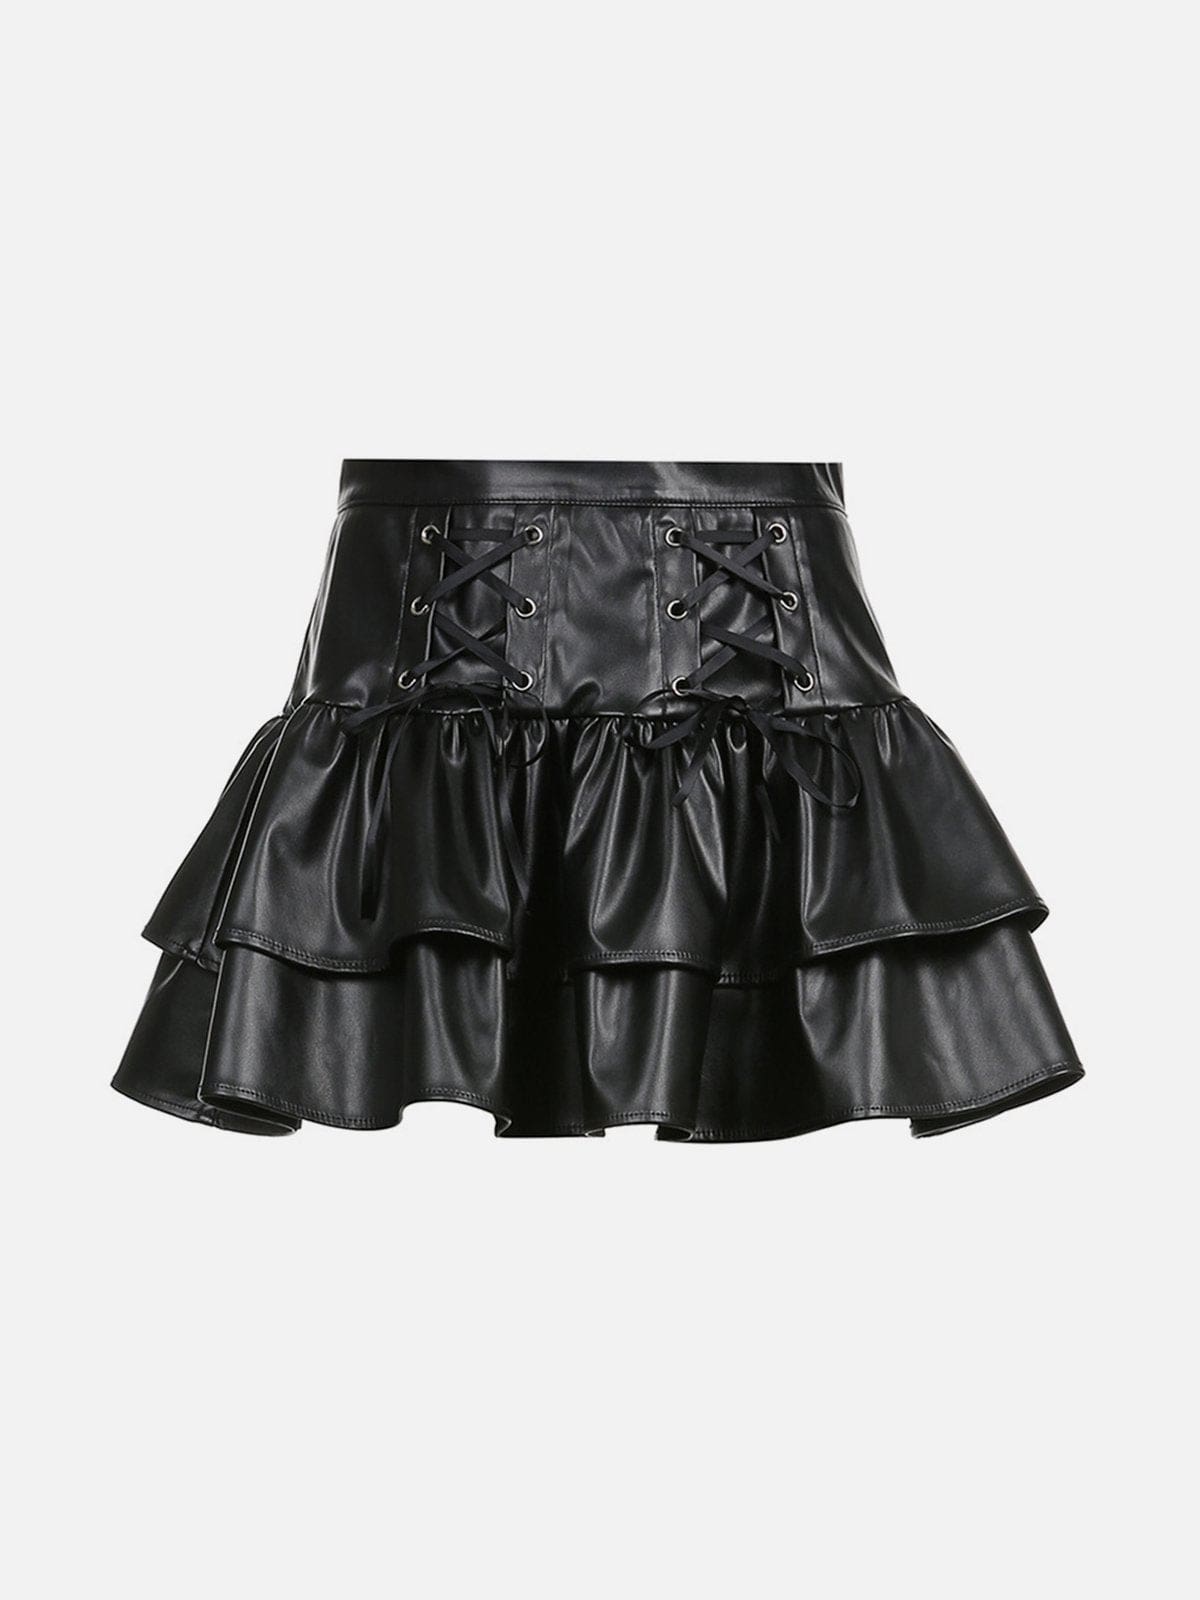 NEV Lace Up Pleated Ruffle Skirt